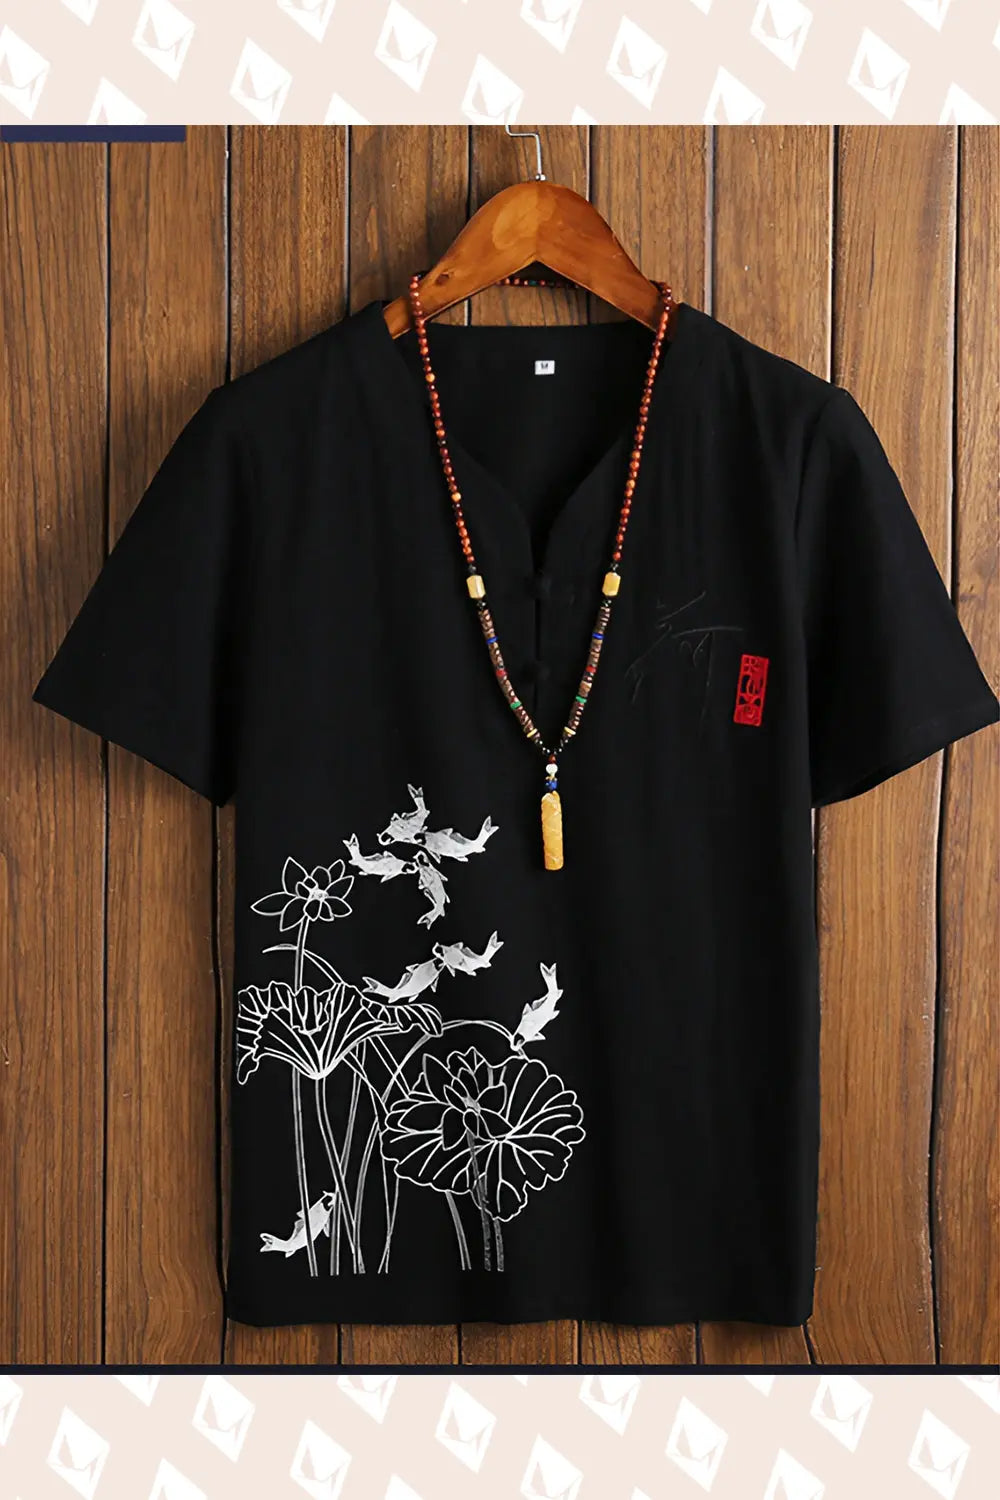 Koi Carp T-Shirt - Black - Strange Clothes